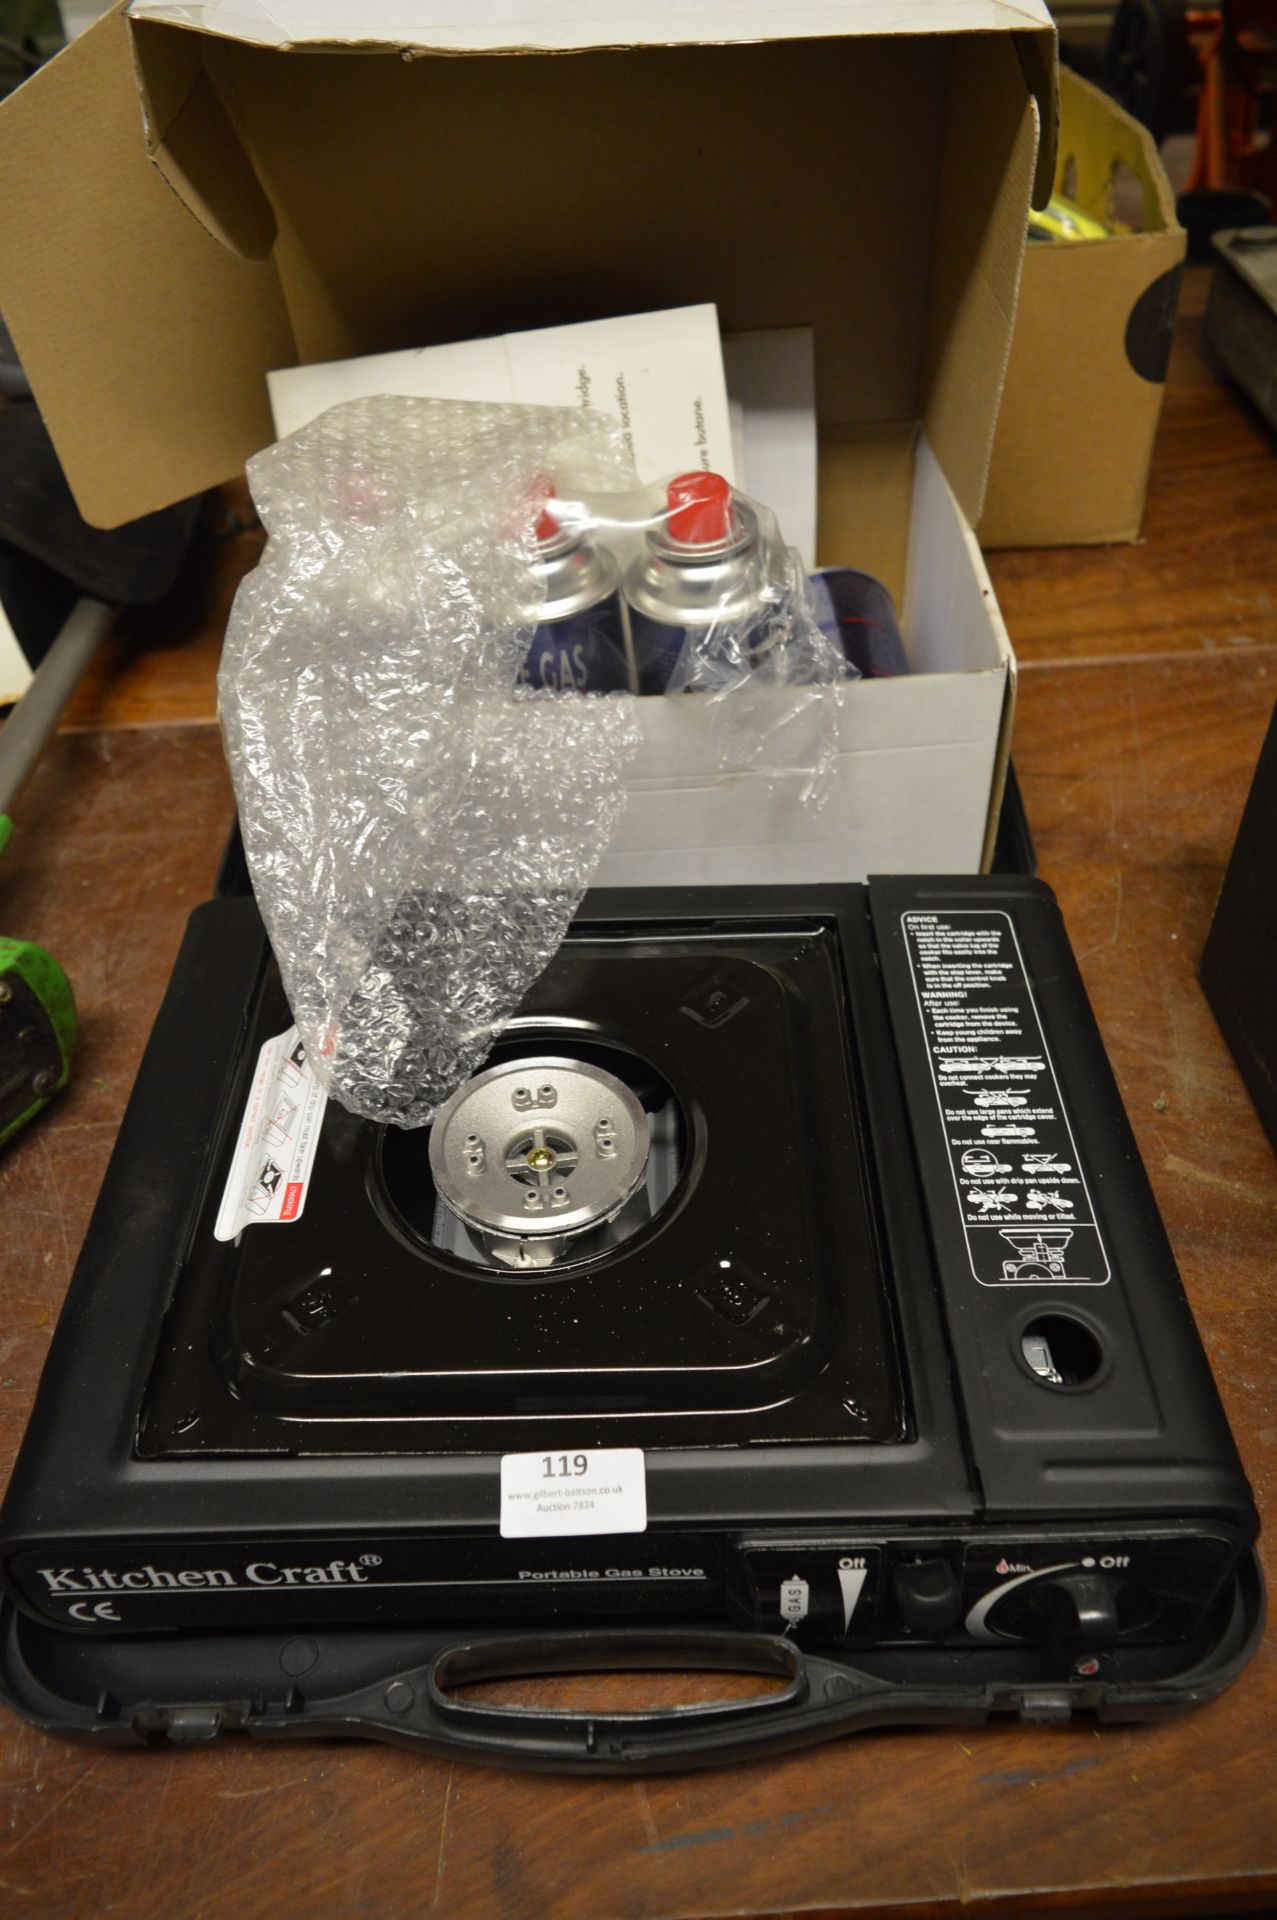 Kitchen Craft Portable Gas Stove and Tins of Butane Gas